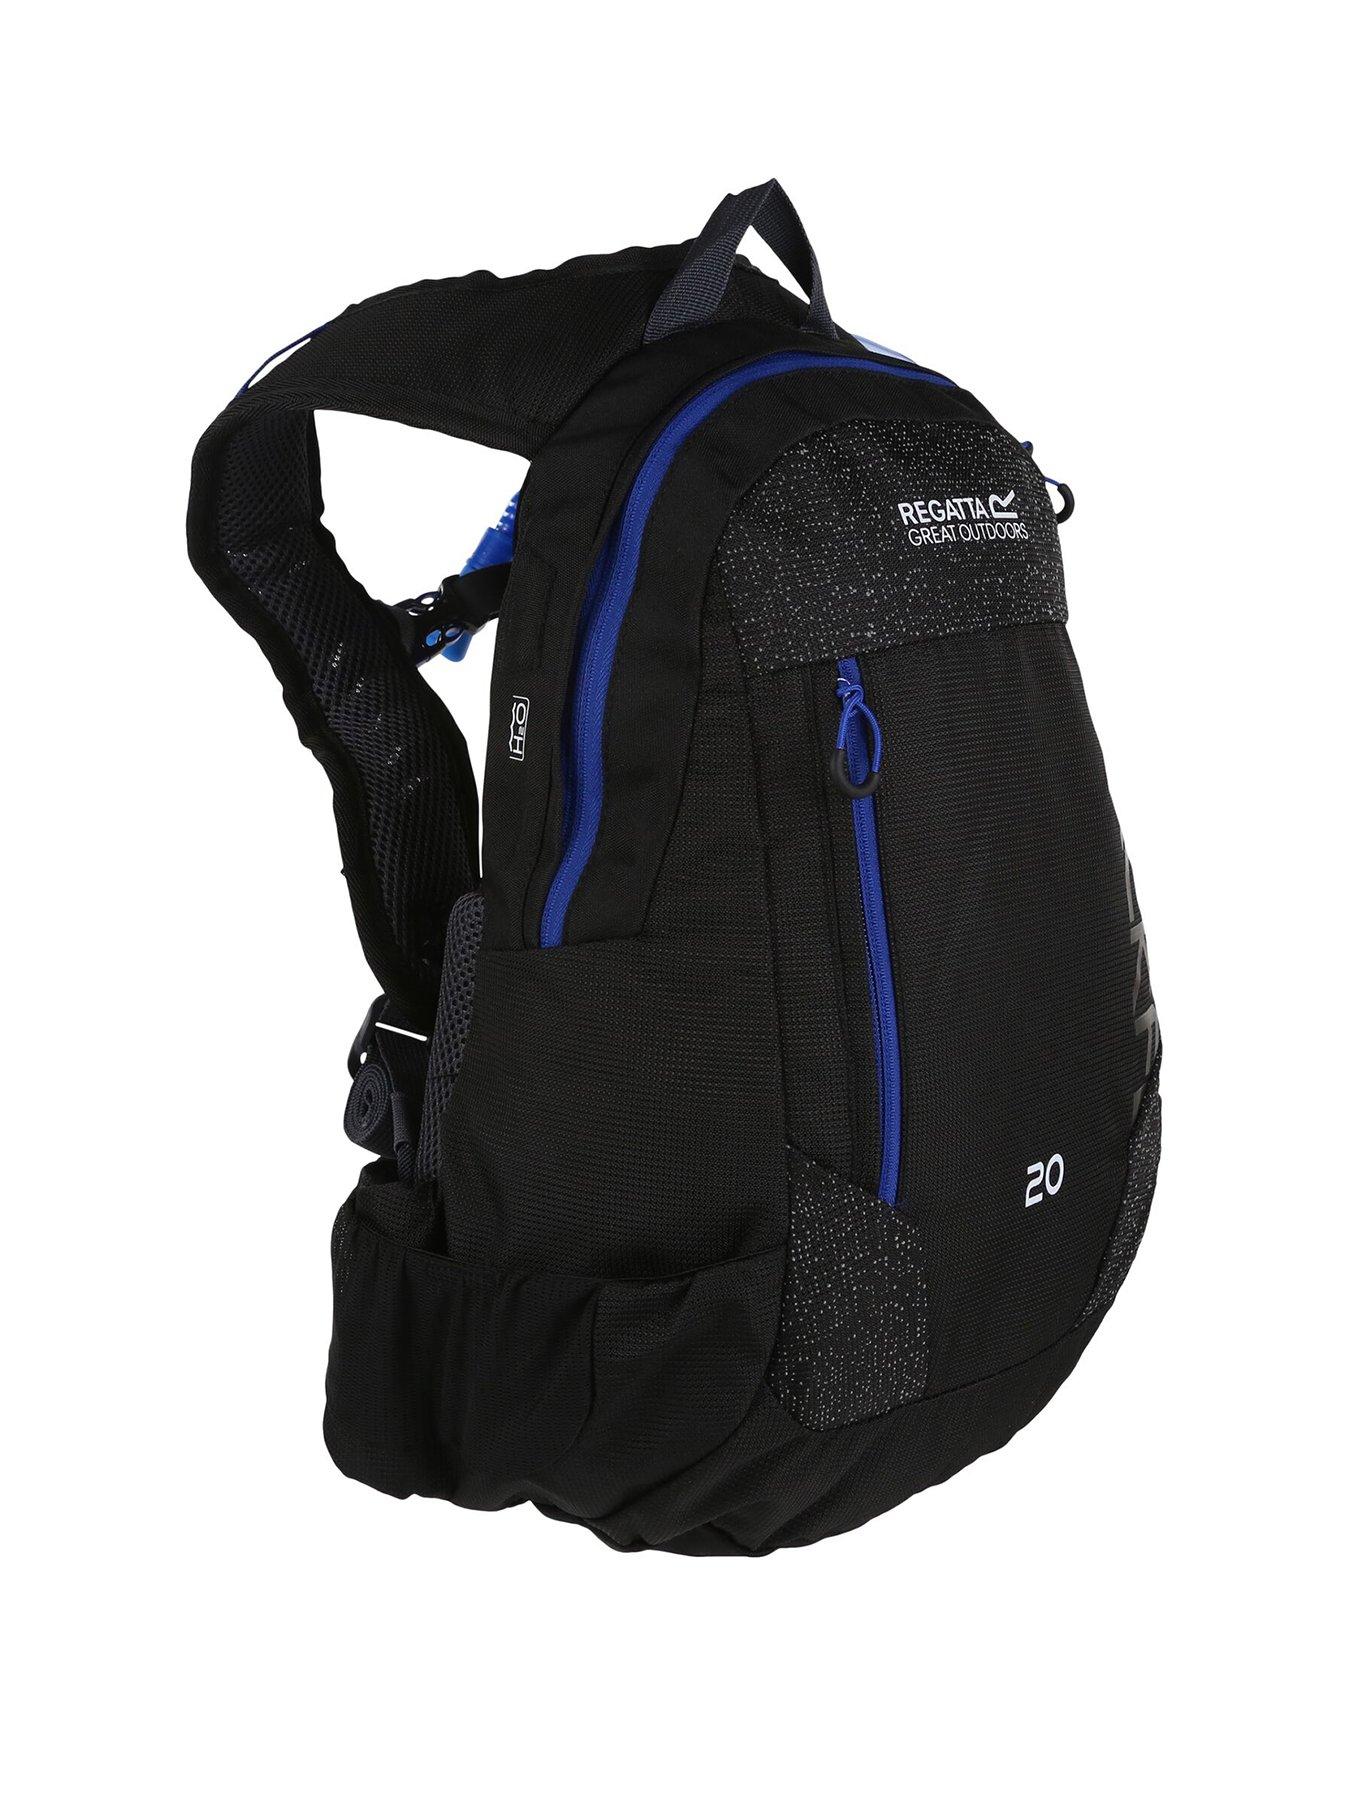 Wwe Backpack Roblox - wwe backpack roblox jockeyunderwars com